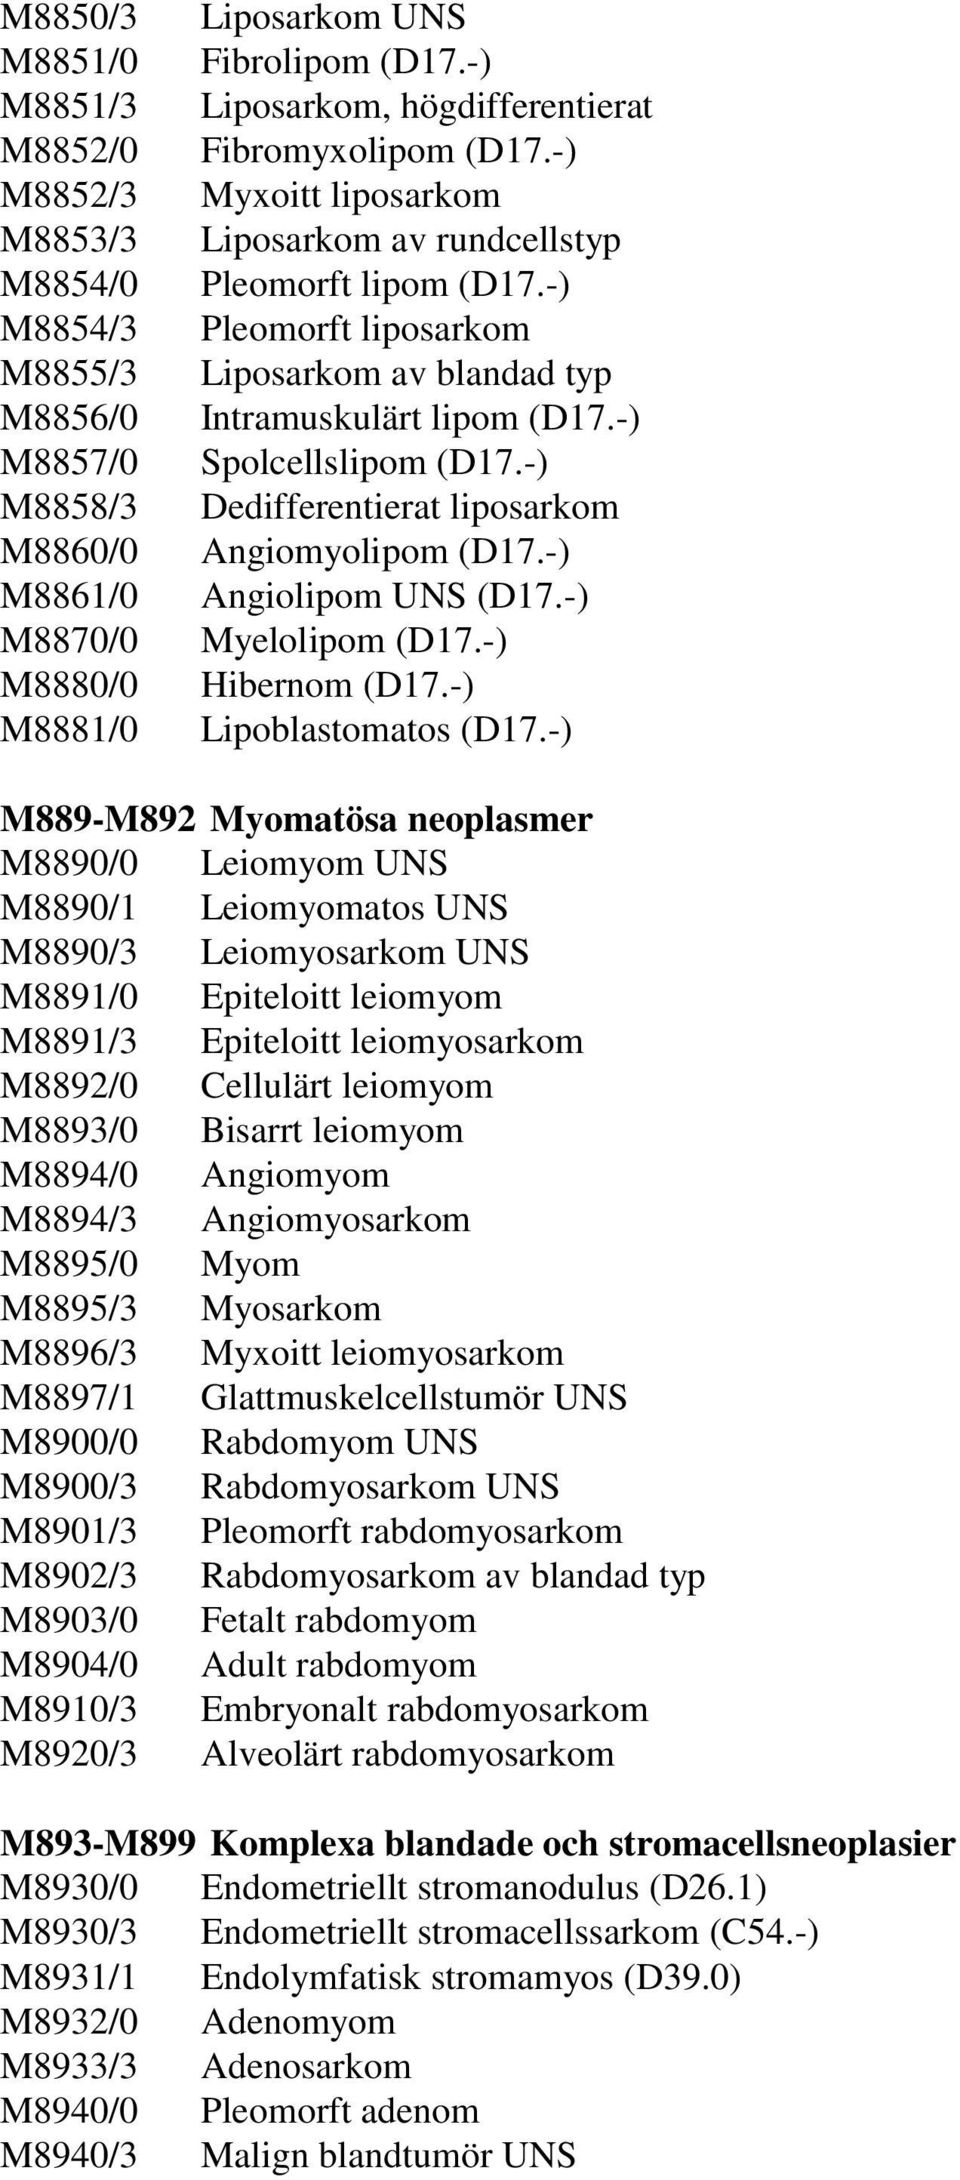 -) M8857/0 Spolcellslipom (D17.-) M8858/3 Dedifferentierat liposarkom M8860/0 Angiomyolipom (D17.-) M8861/0 Angiolipom UNS (D17.-) M8870/0 Myelolipom (D17.-) M8880/0 Hibernom (D17.